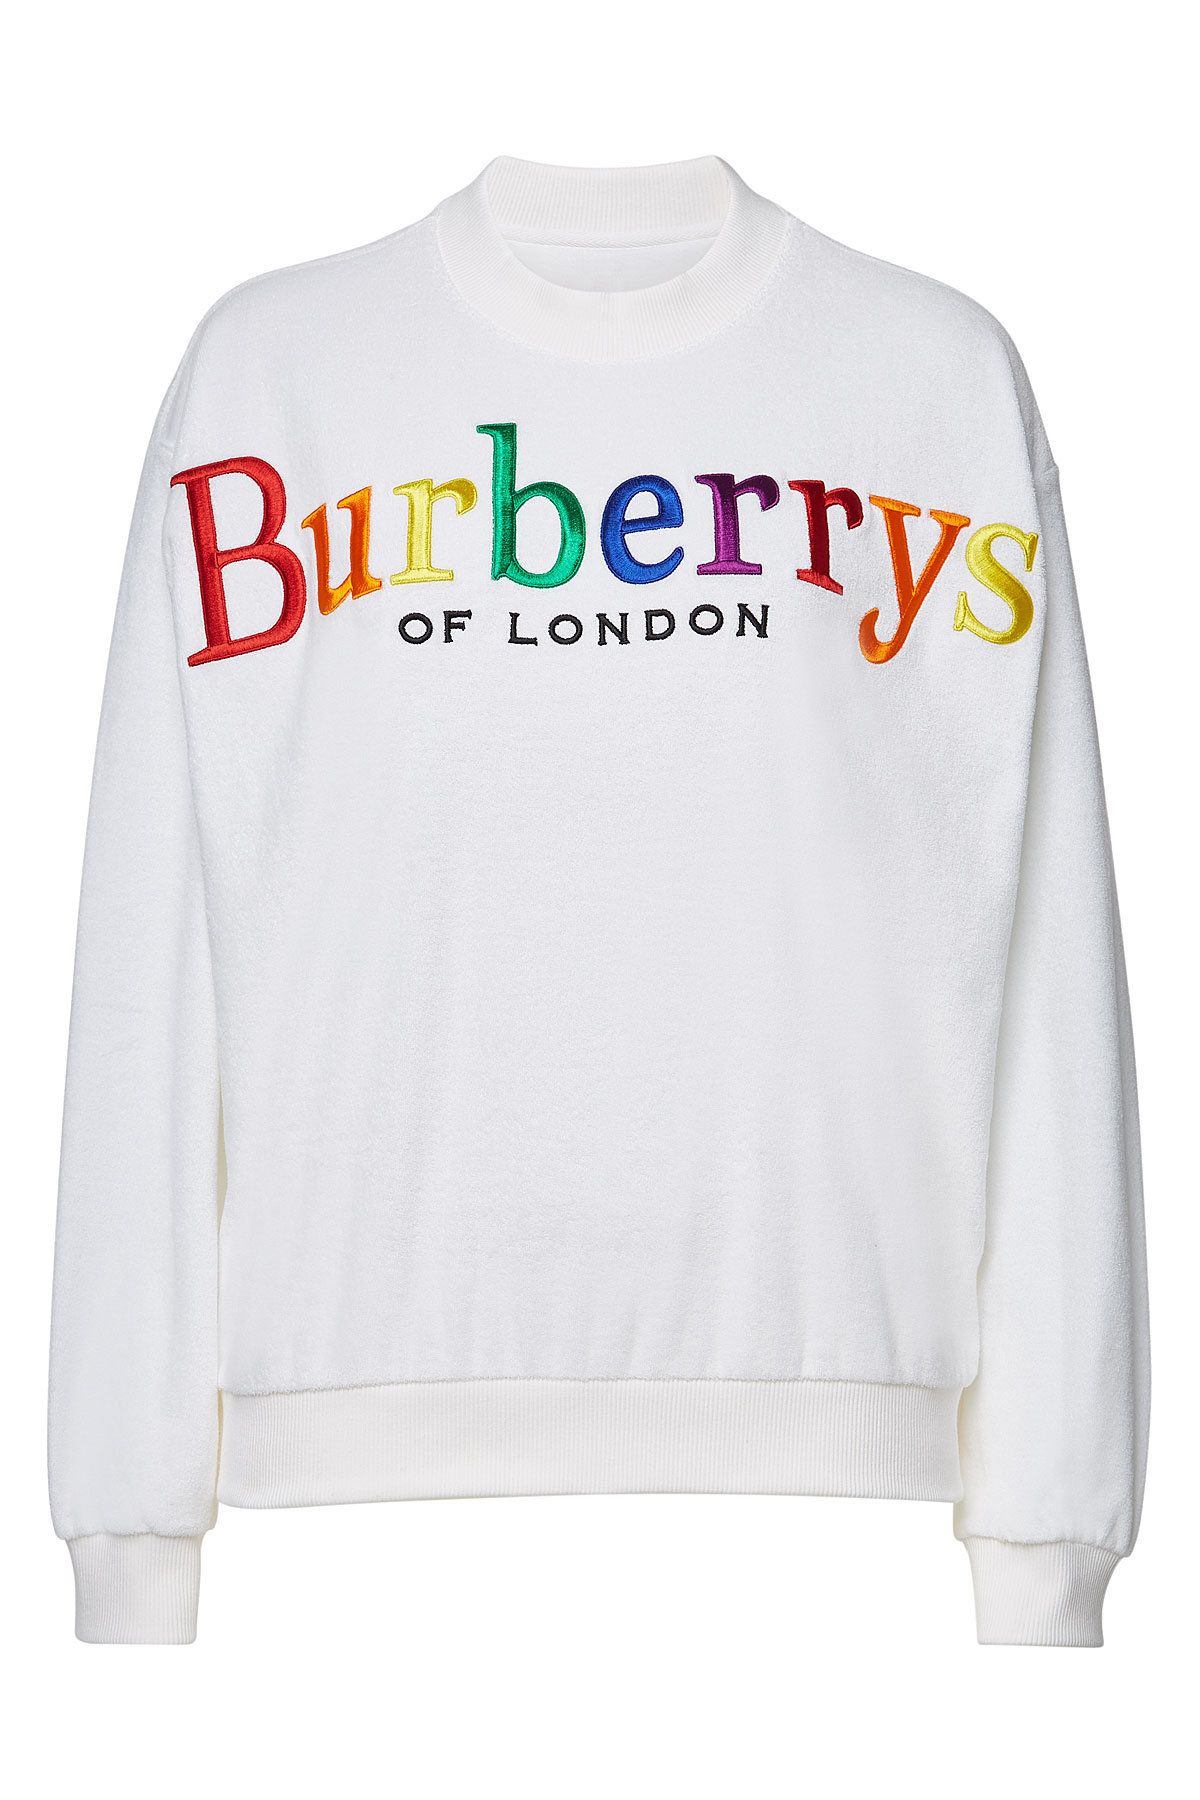 Burberry Embroidered Cotton Sweatshirt 